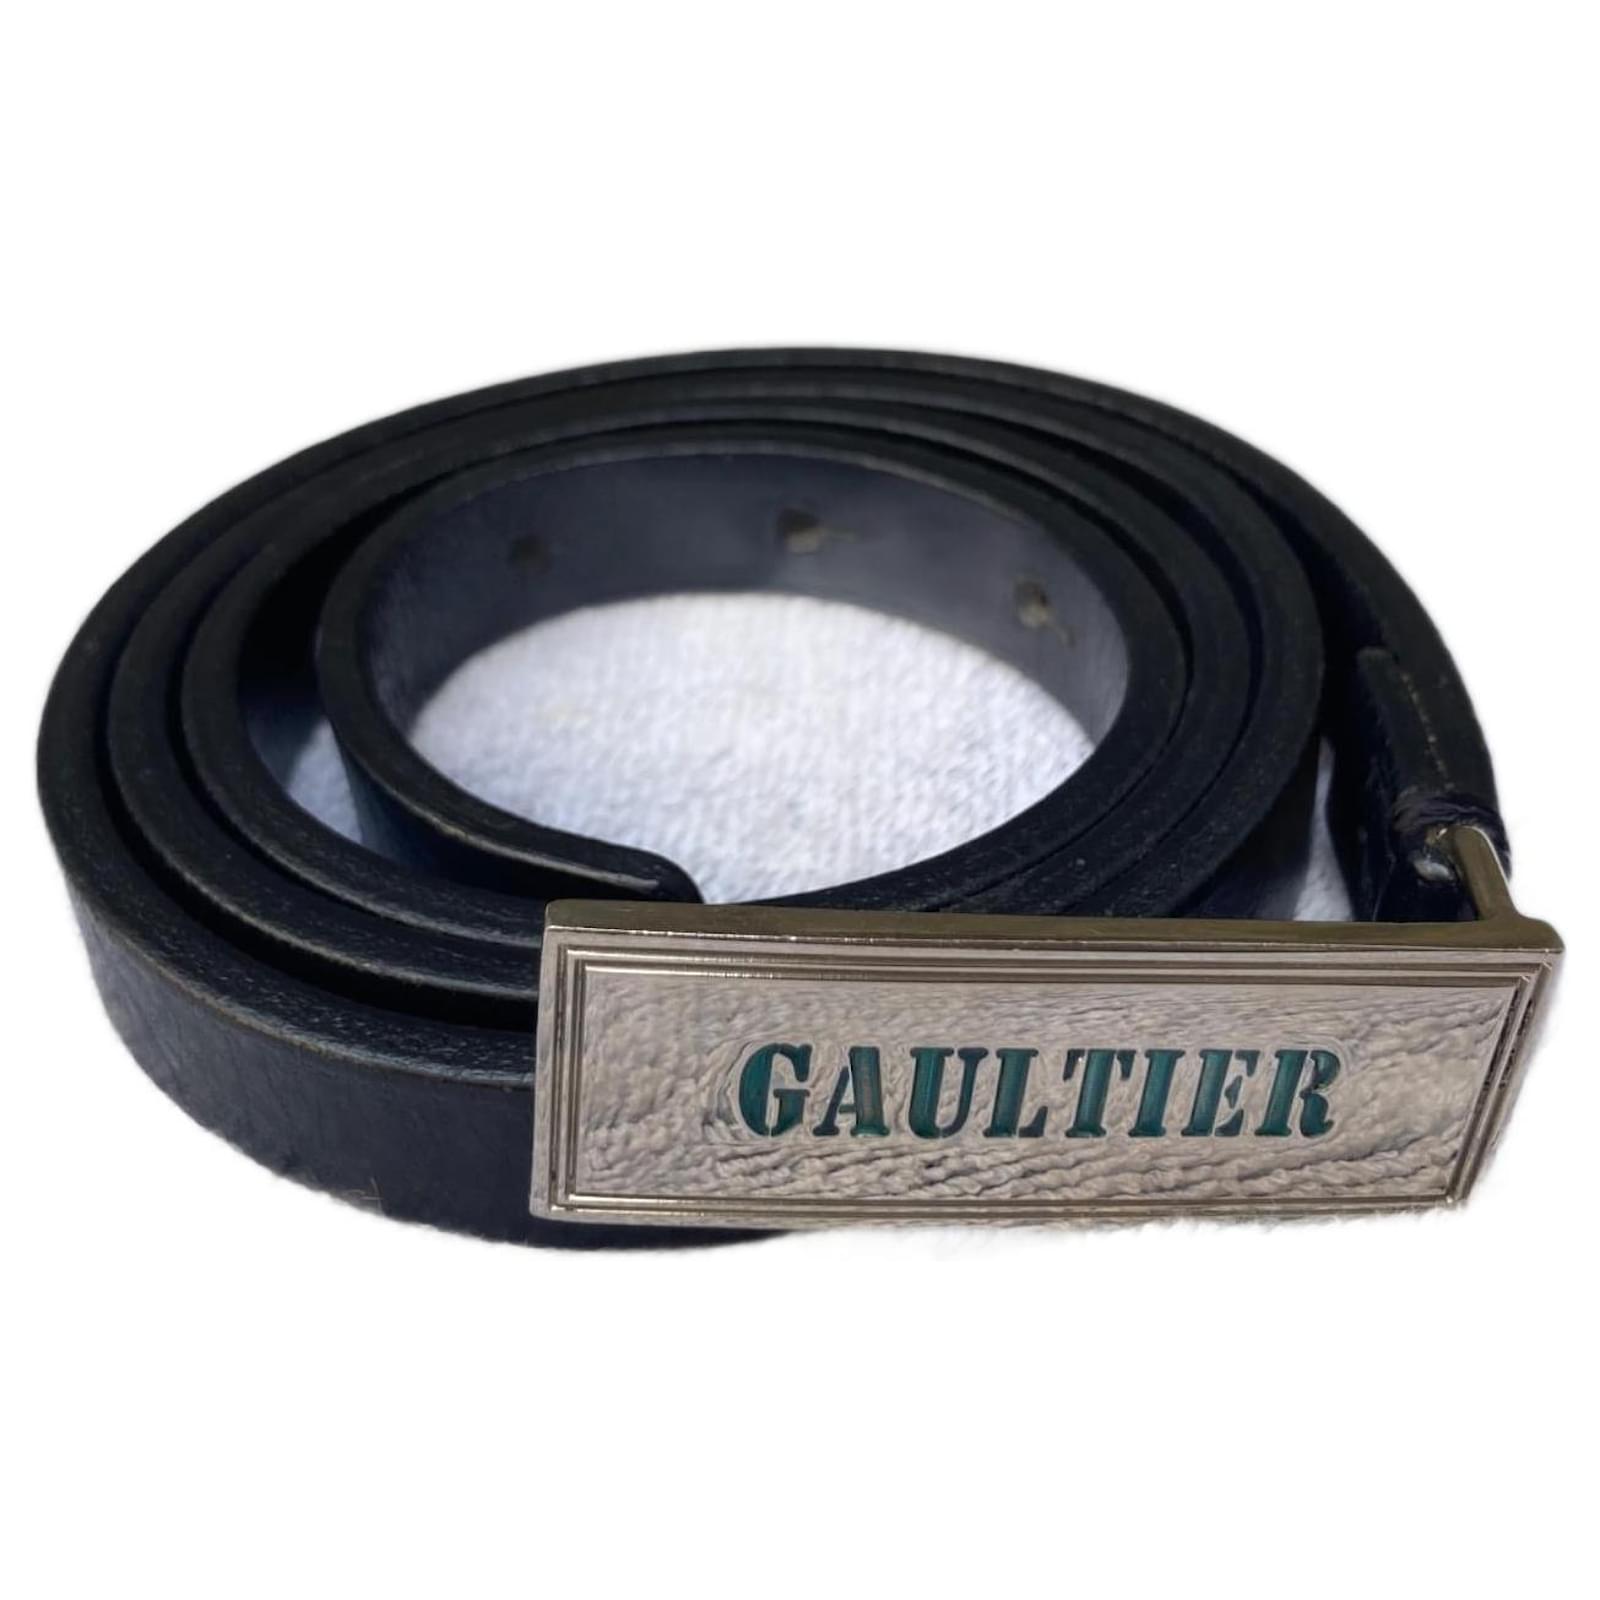 Superb Jean Paul Gaultier belt Black Light green Silver hardware